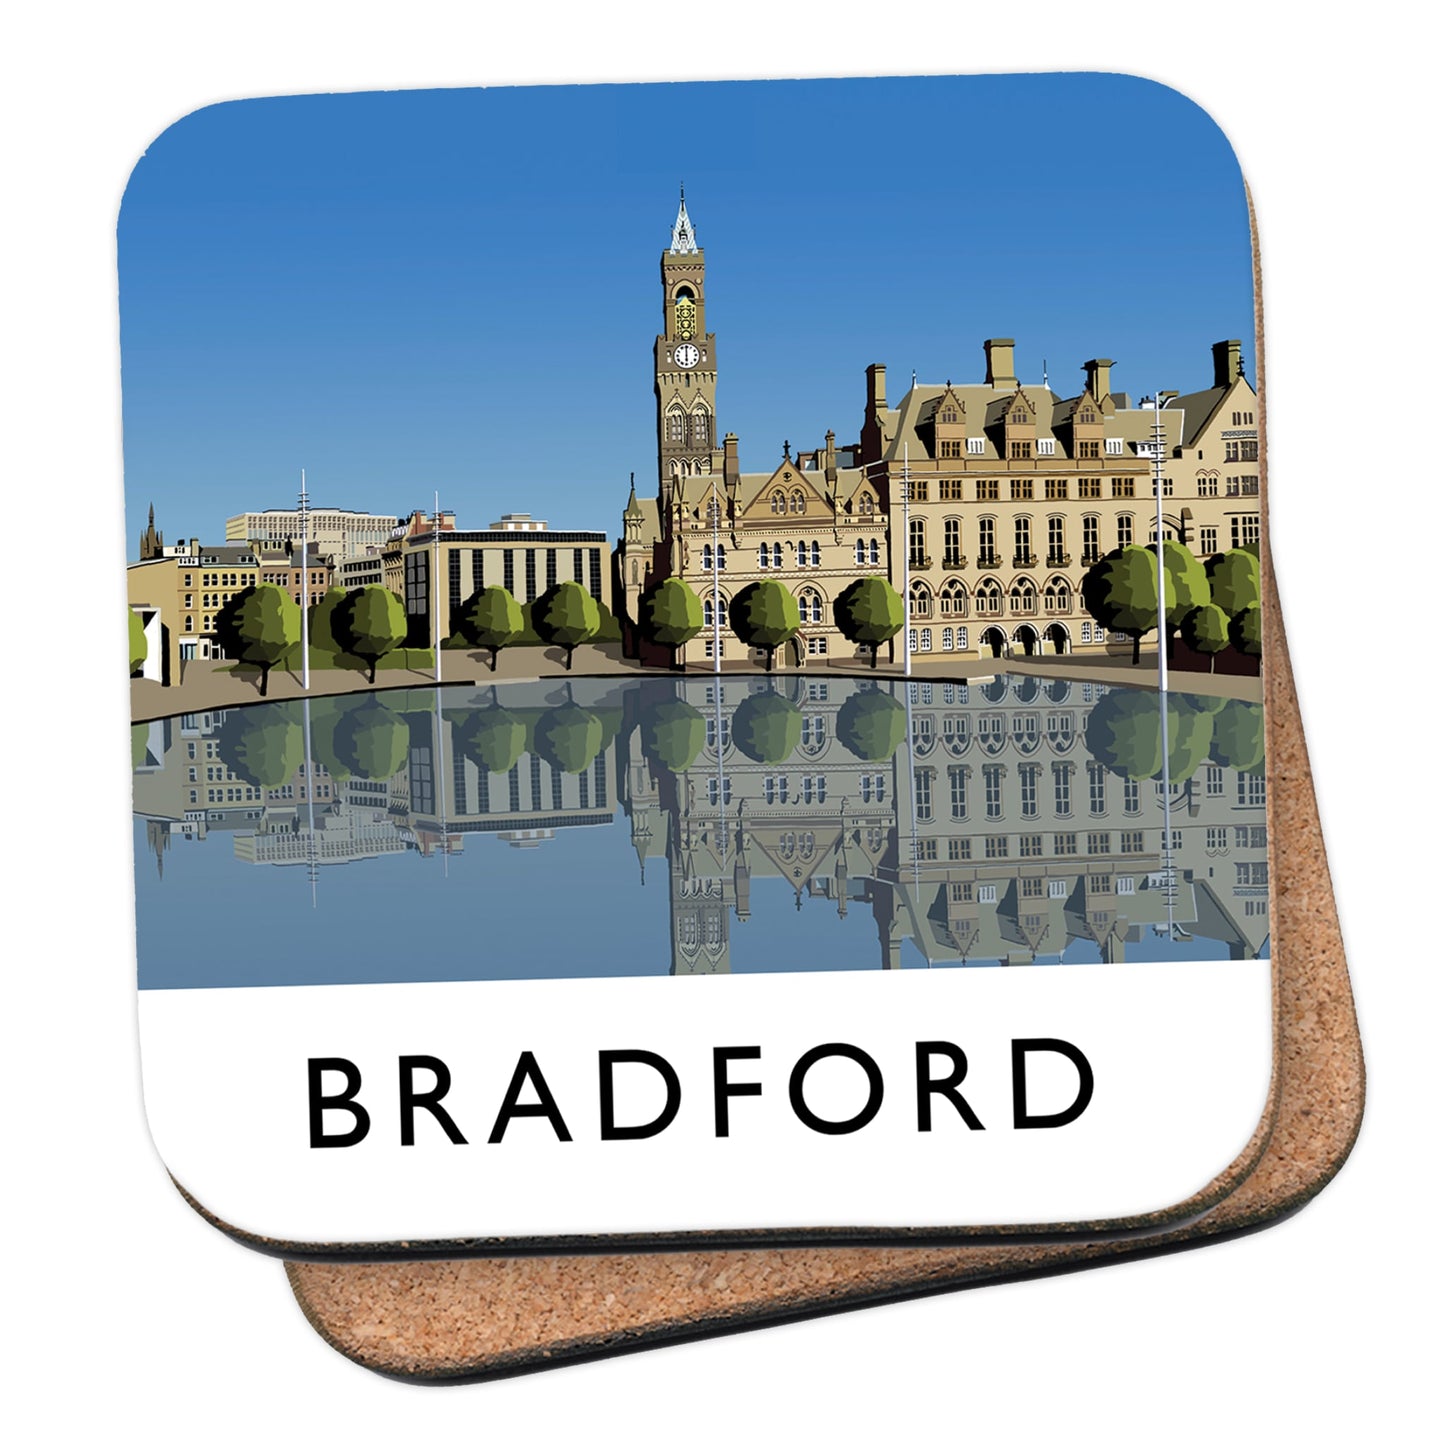 Bradford Coaster - The Great Yorkshire Shop